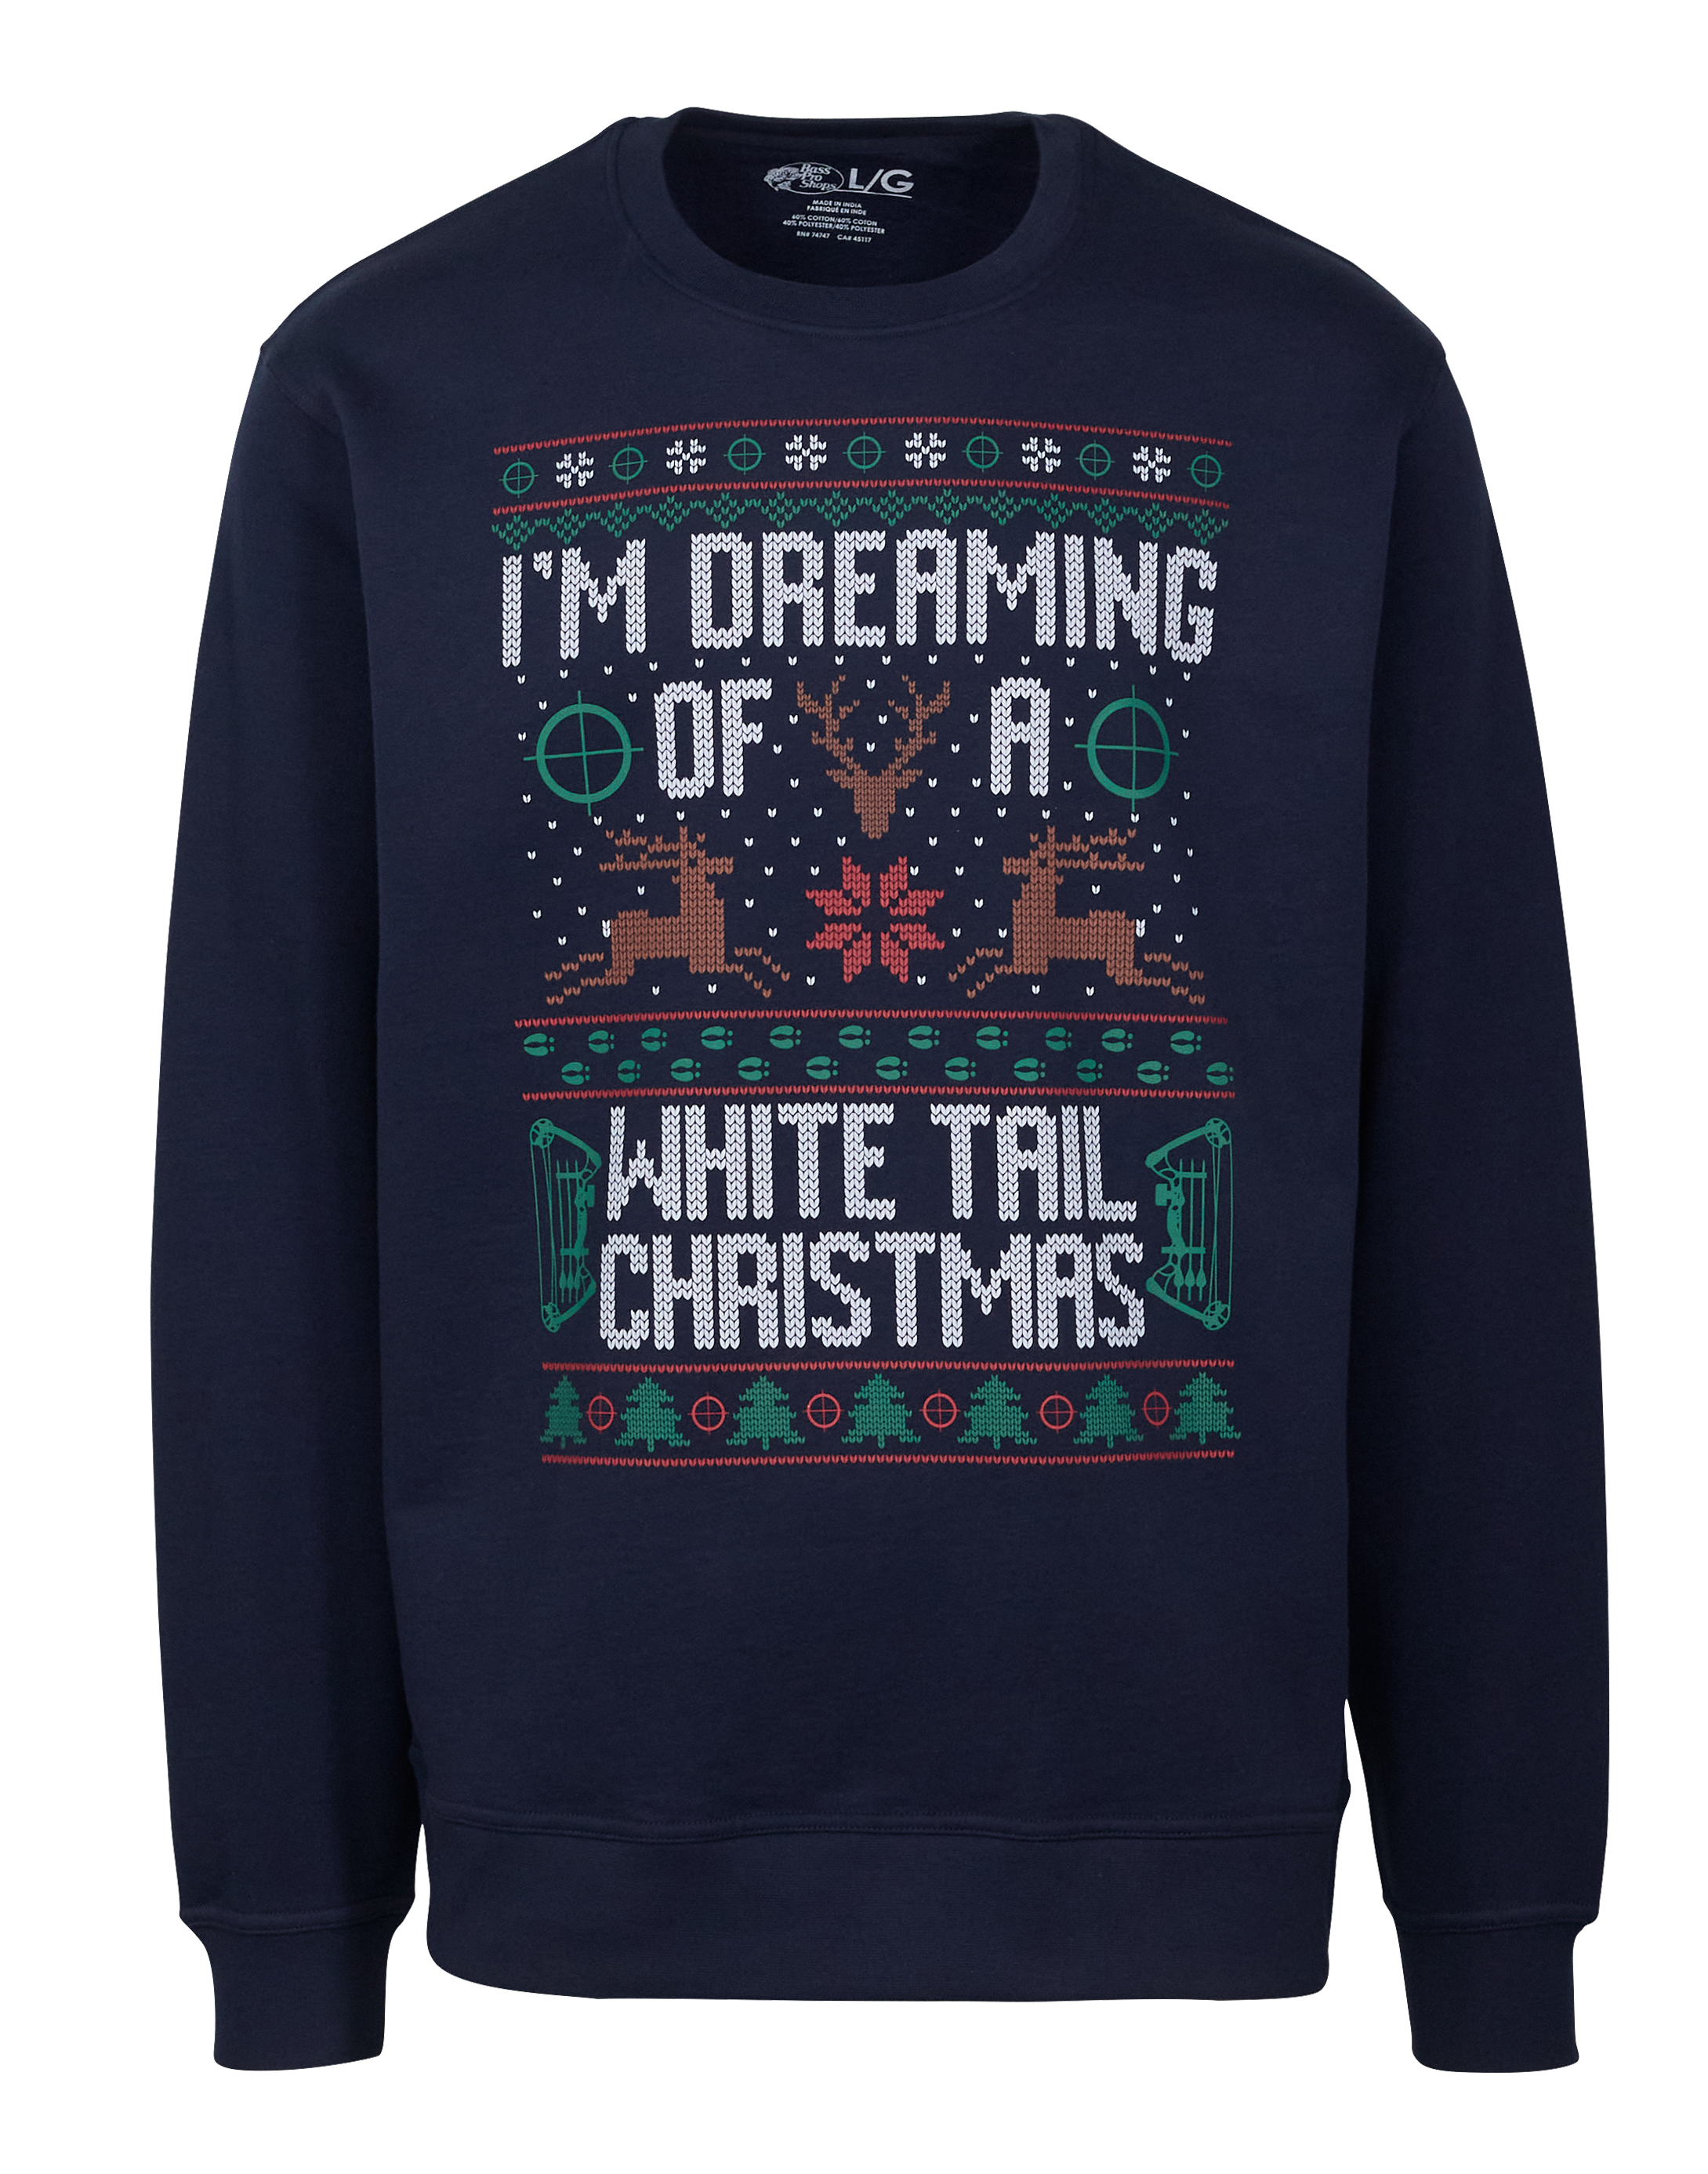 Bass Pro Shops Whitetail Christmas Sweatshirt for Adults - Blue - M